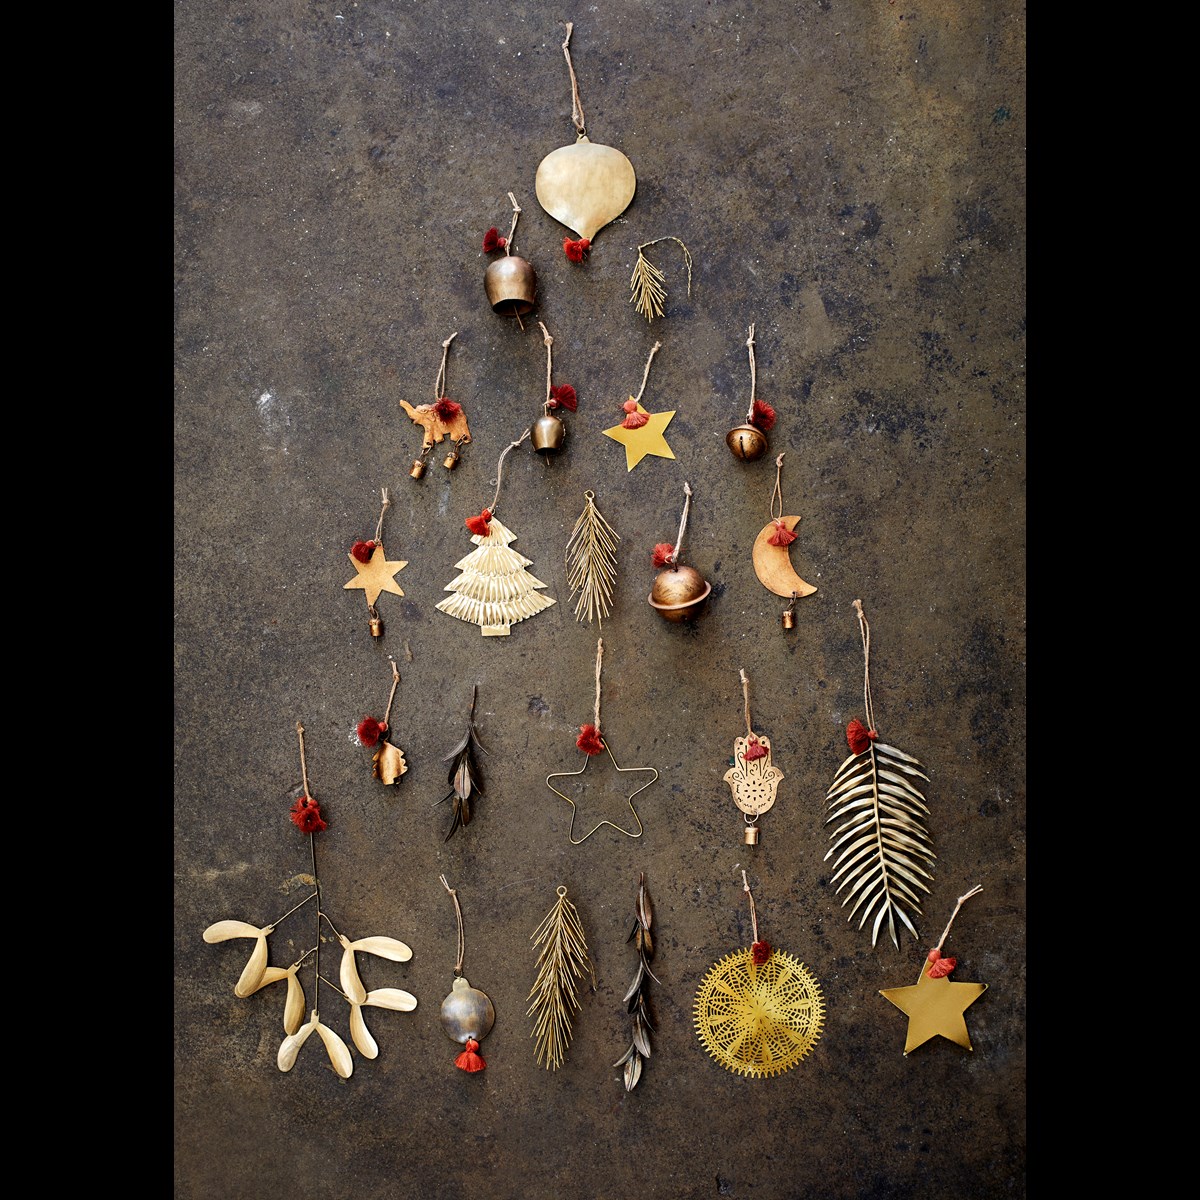 Hanging iron ornaments